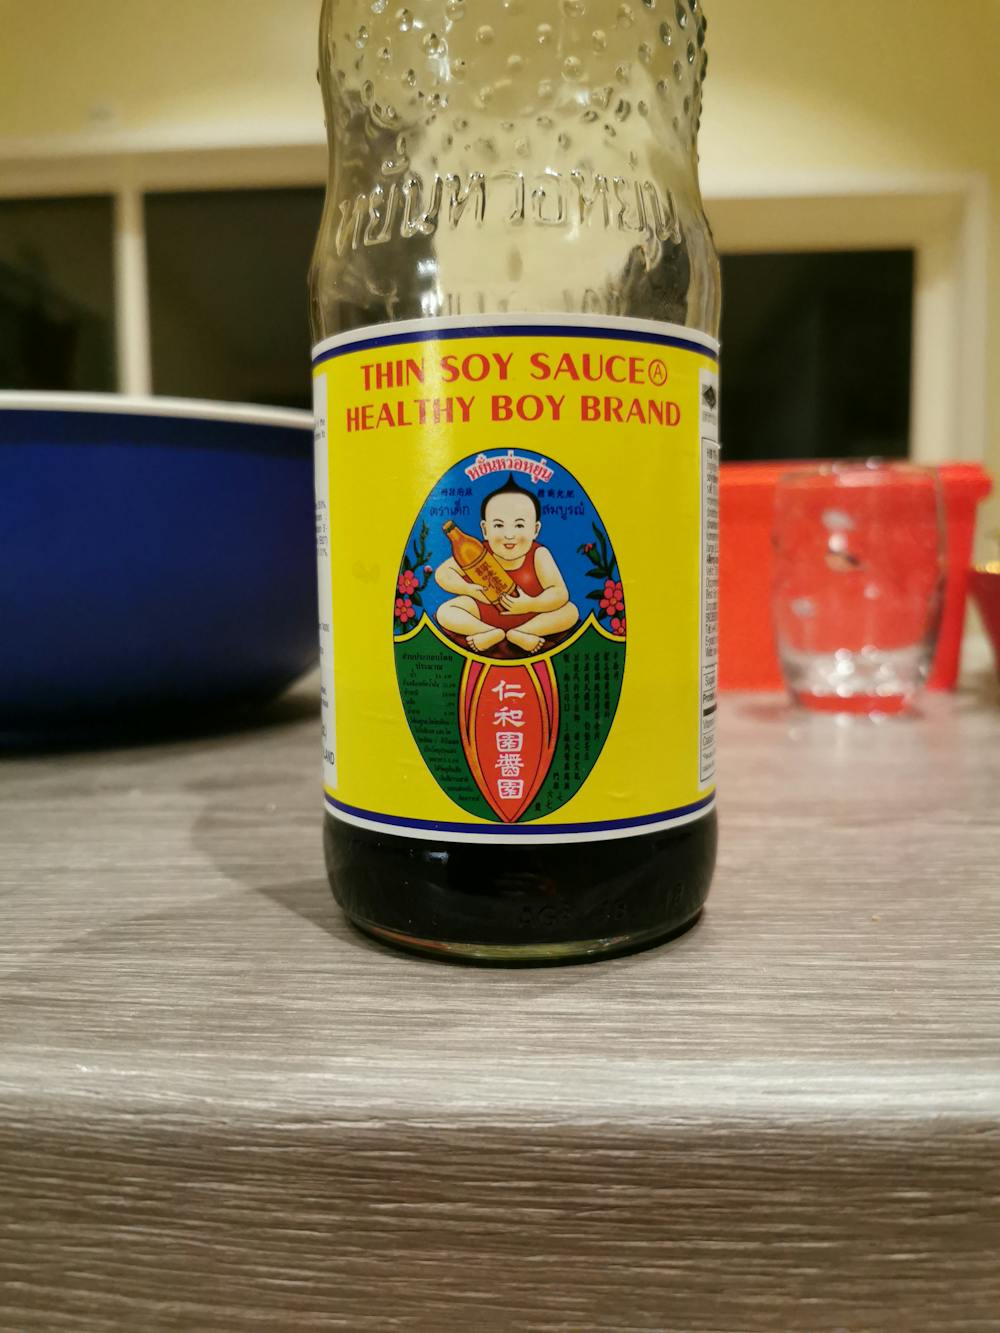 Thin soy sauce, Healthy boy brand